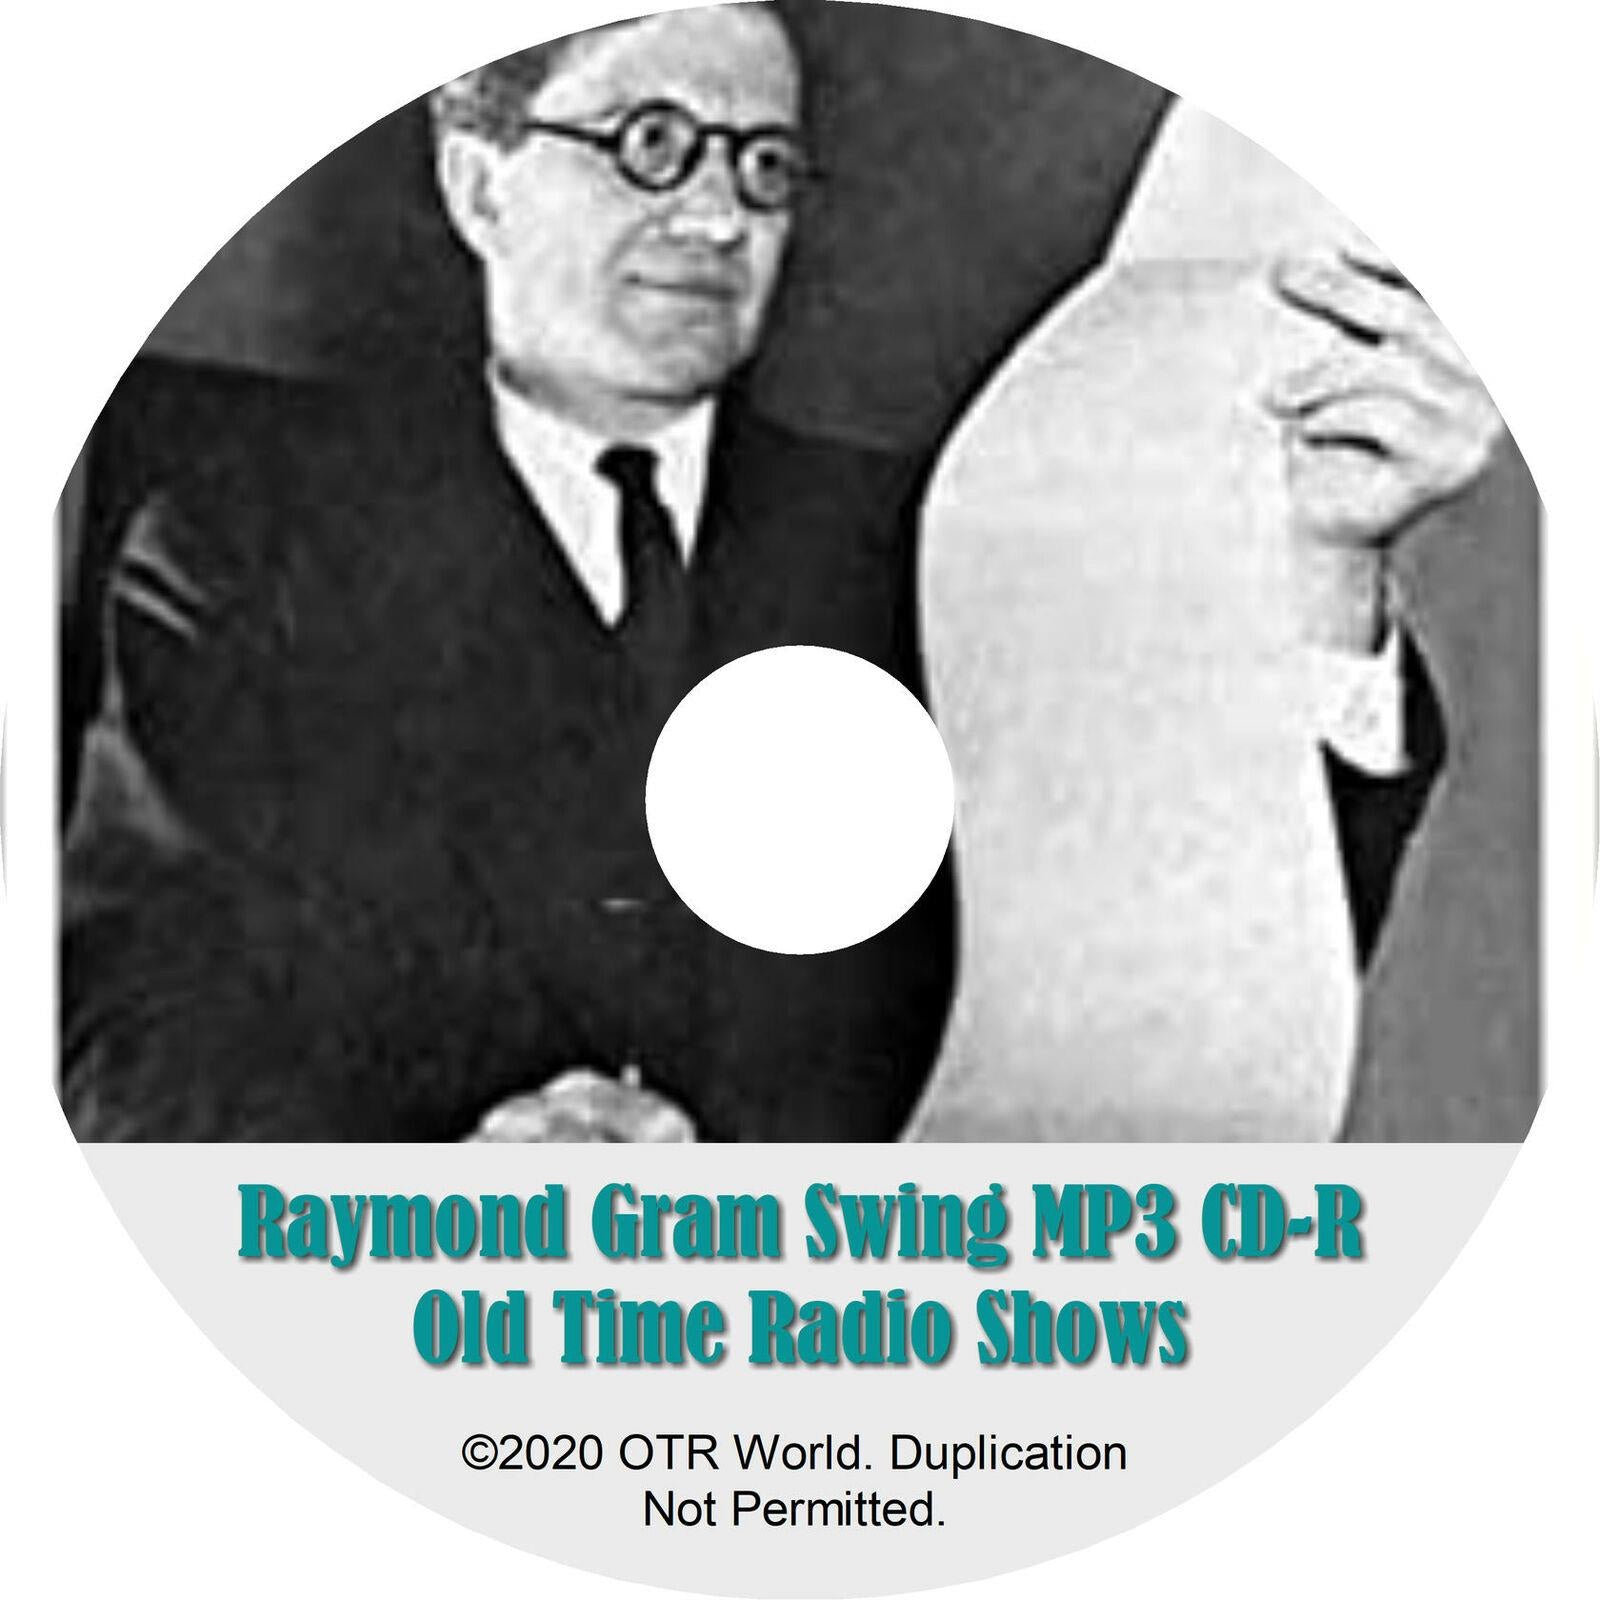 Raymond Gram Swing Old Time Radio Shows OTR OTRS 5 Episodes On MP3 CD-R